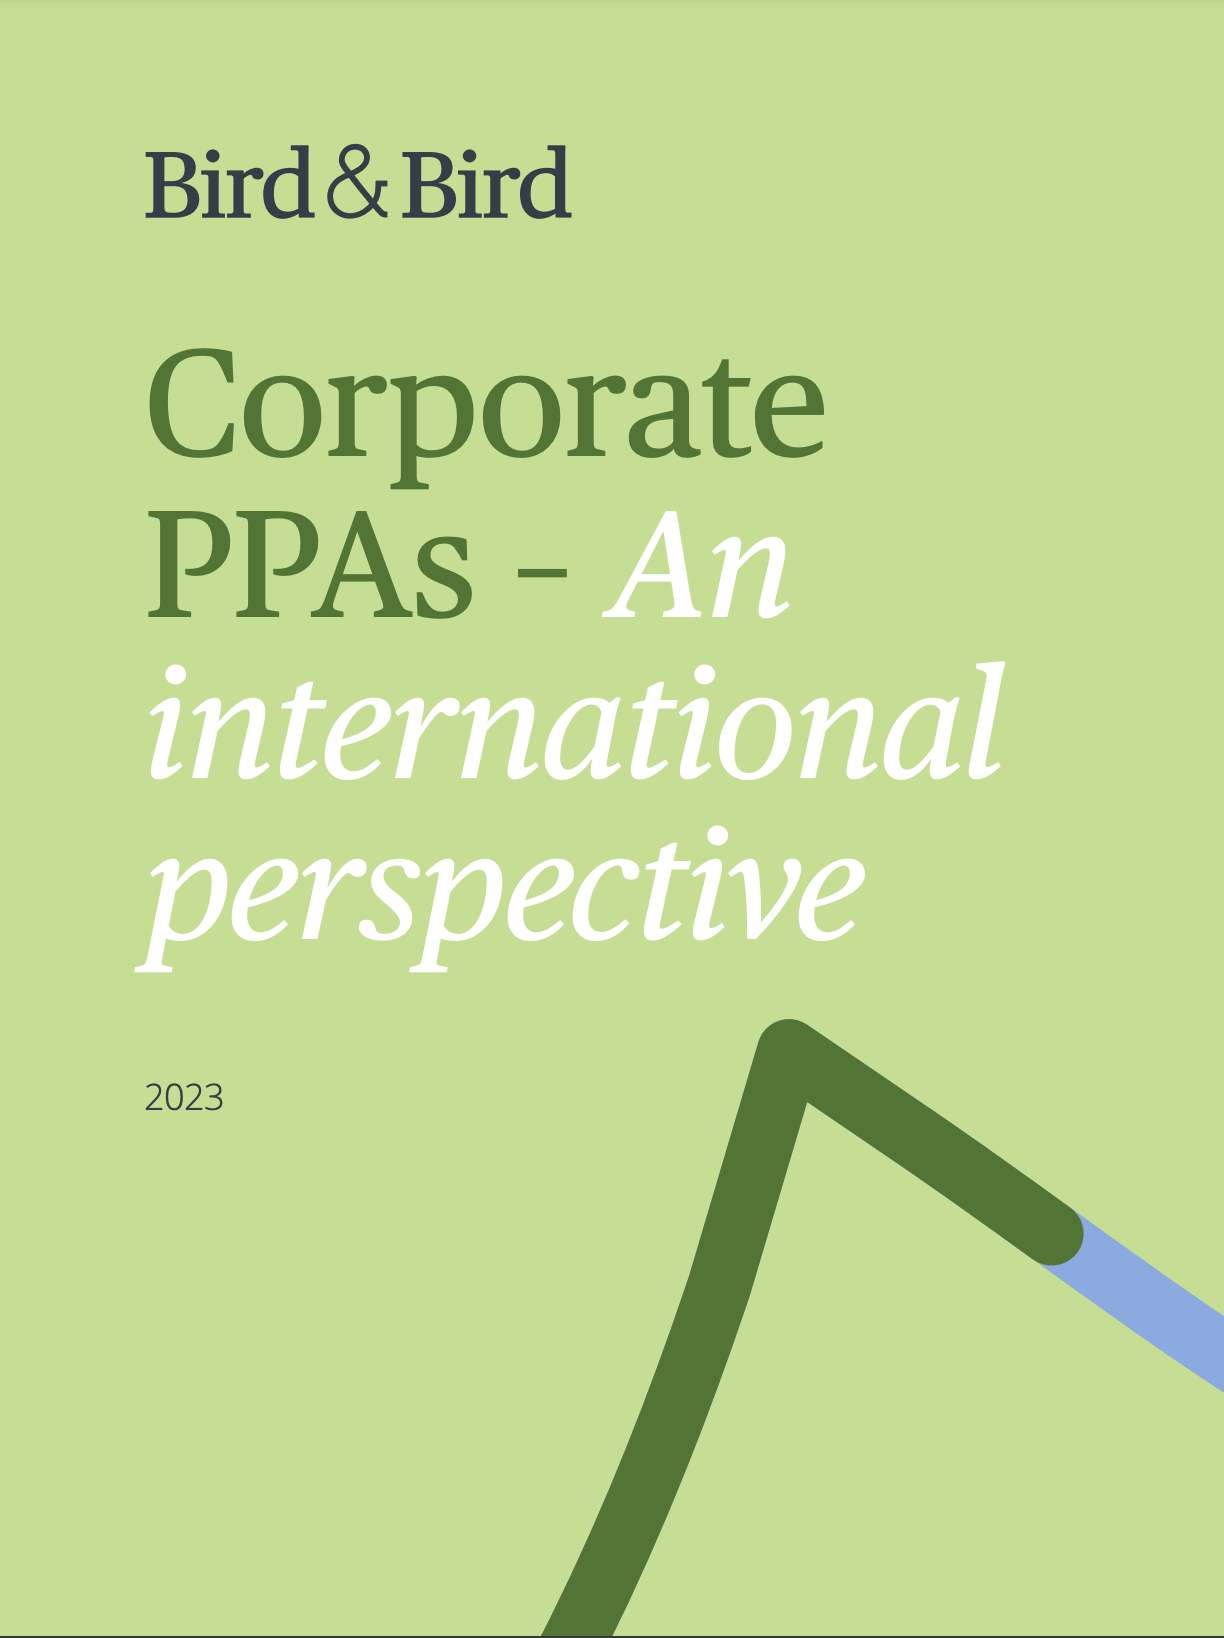 Market report cover image: Bird & Bird: International Corporate PPA Report